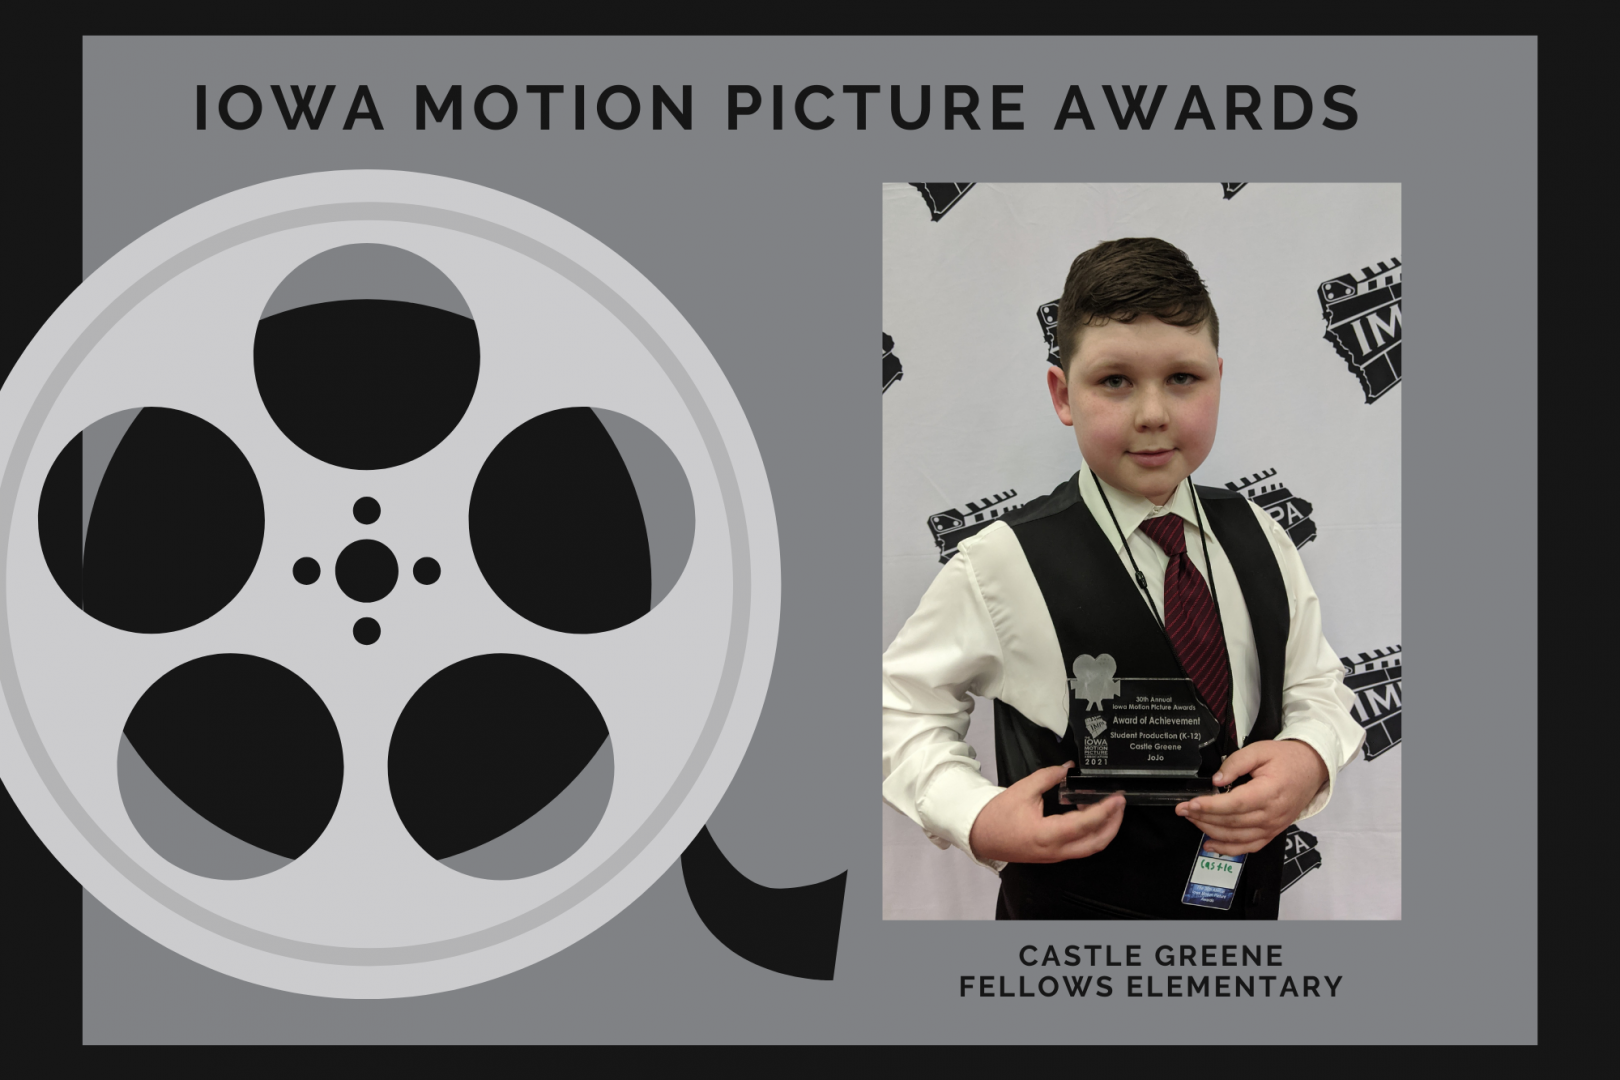 Fellows Elementary 4th-Grader, Castle Greene, earns Iowa Motion Picture Award